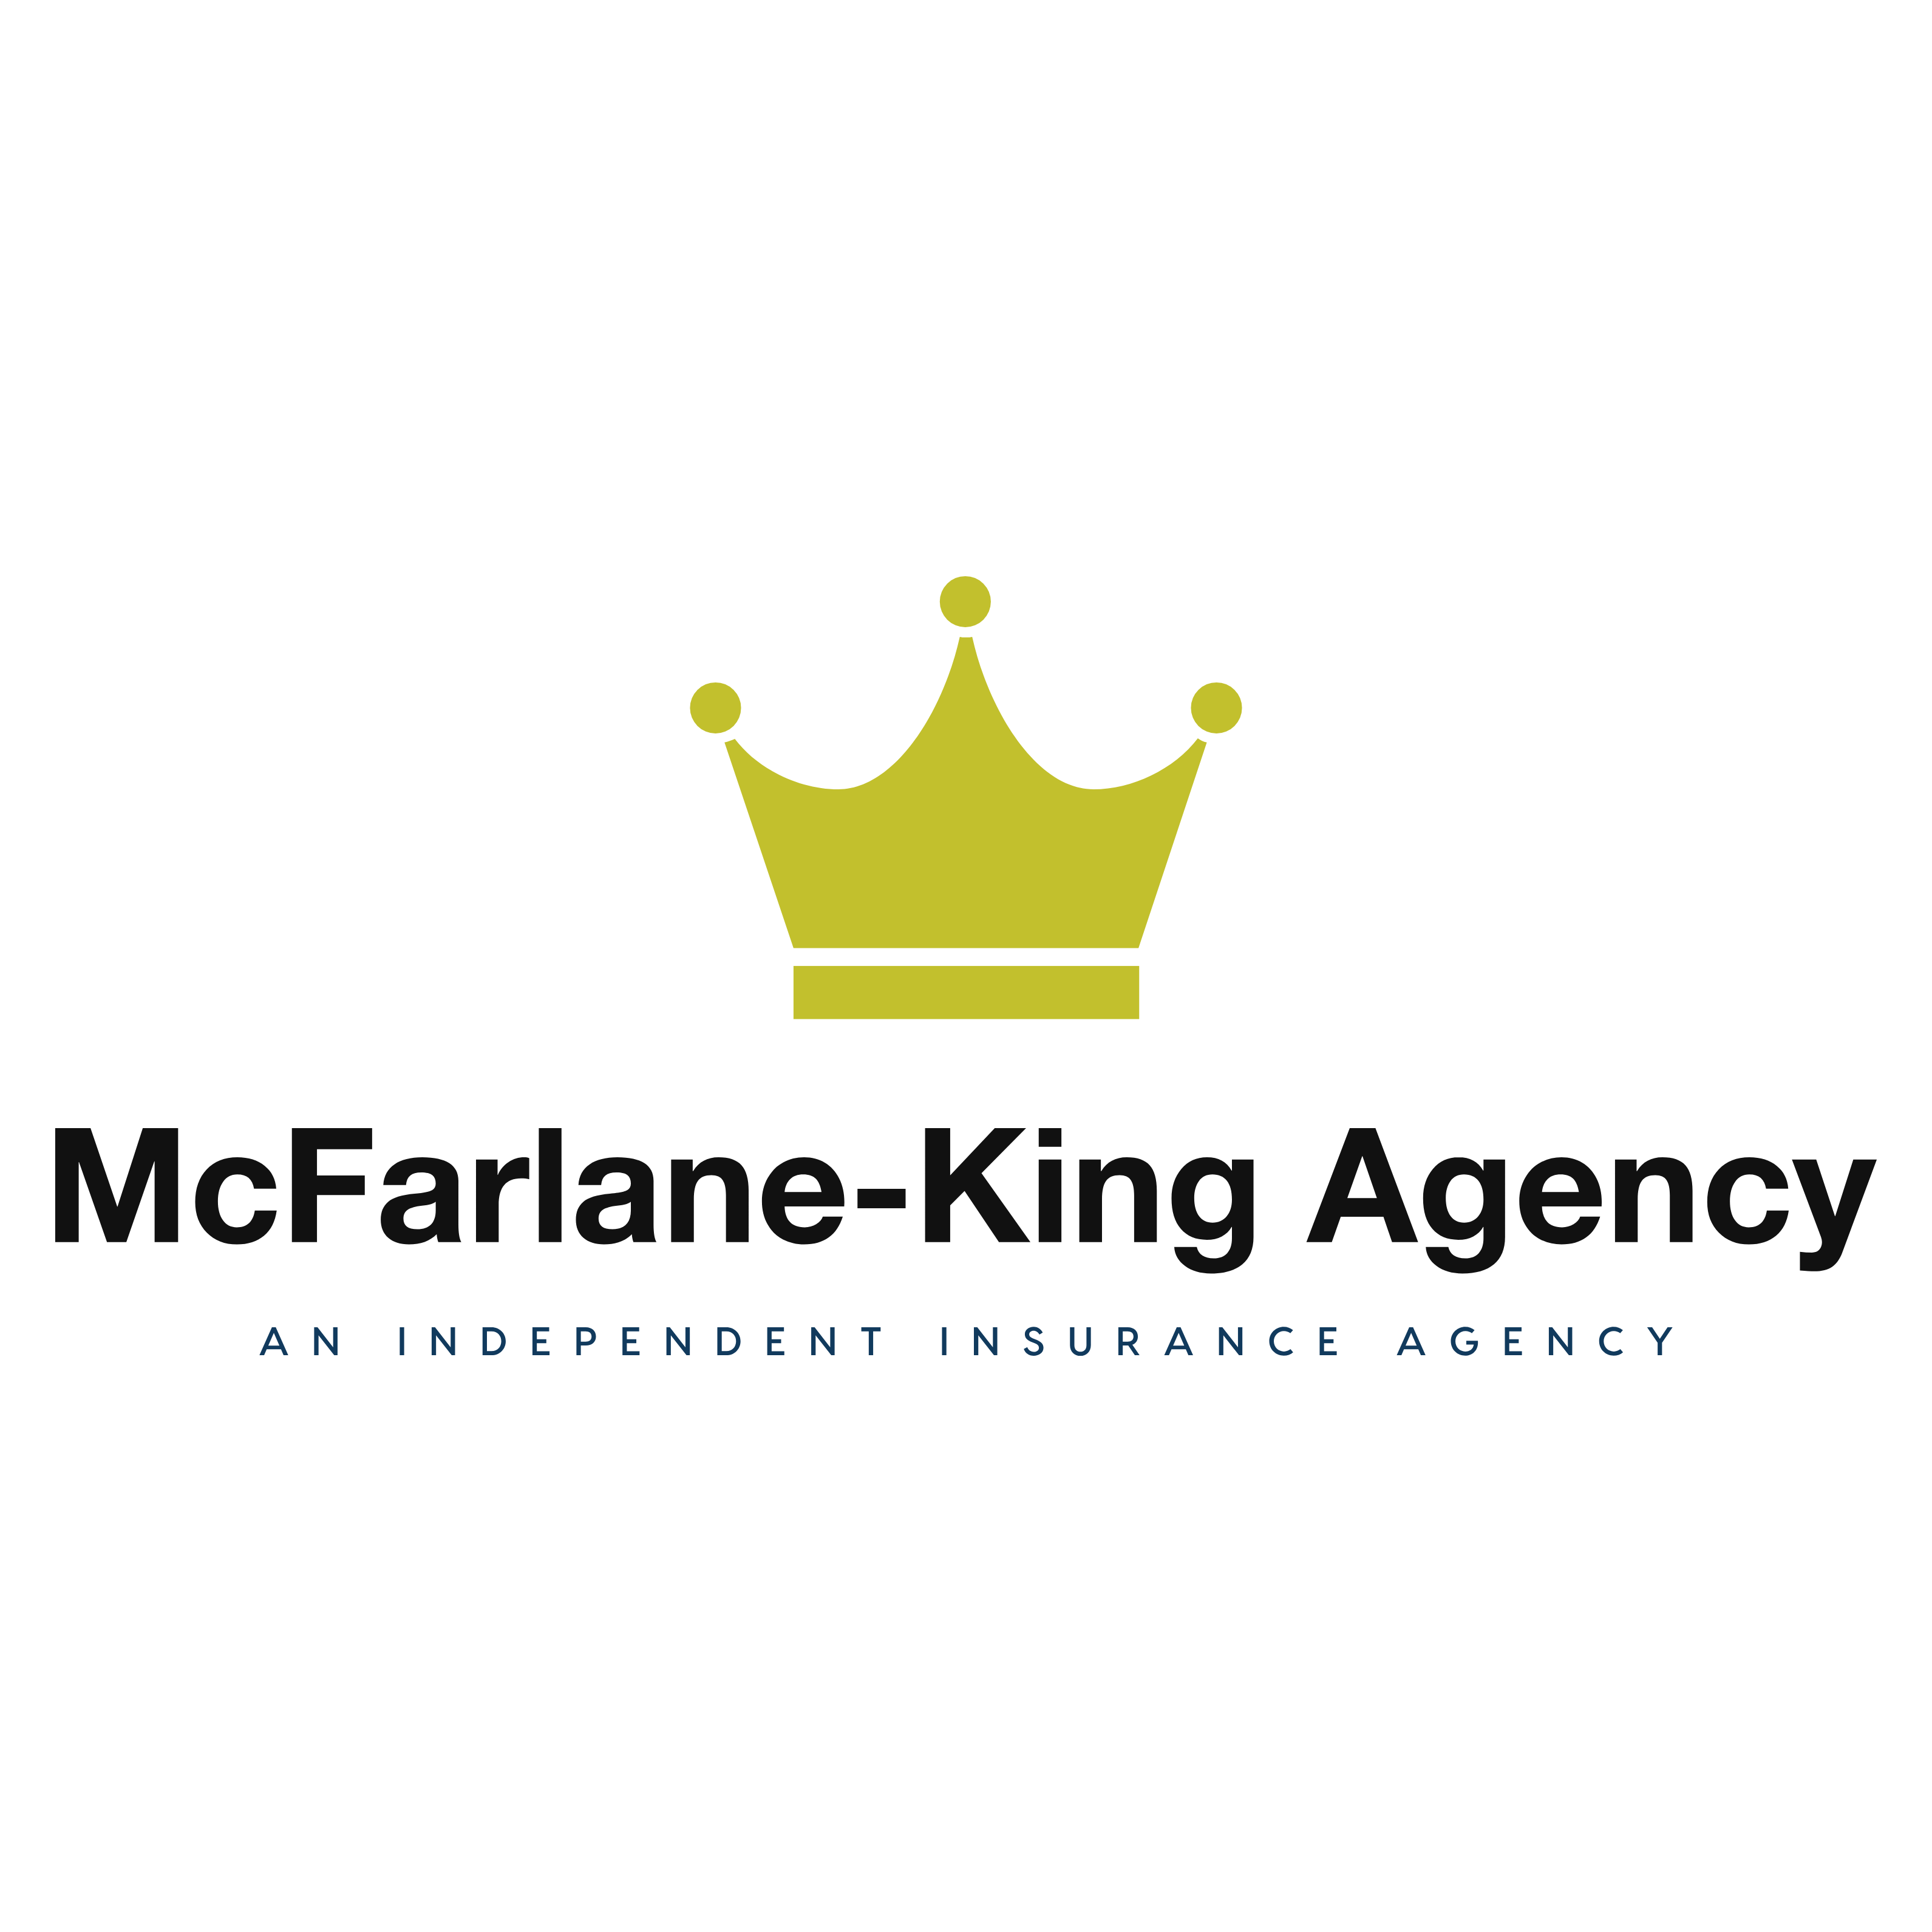 McFarlane-King Agency - Garden City, MI 48135 - (734)427-3000 | ShowMeLocal.com